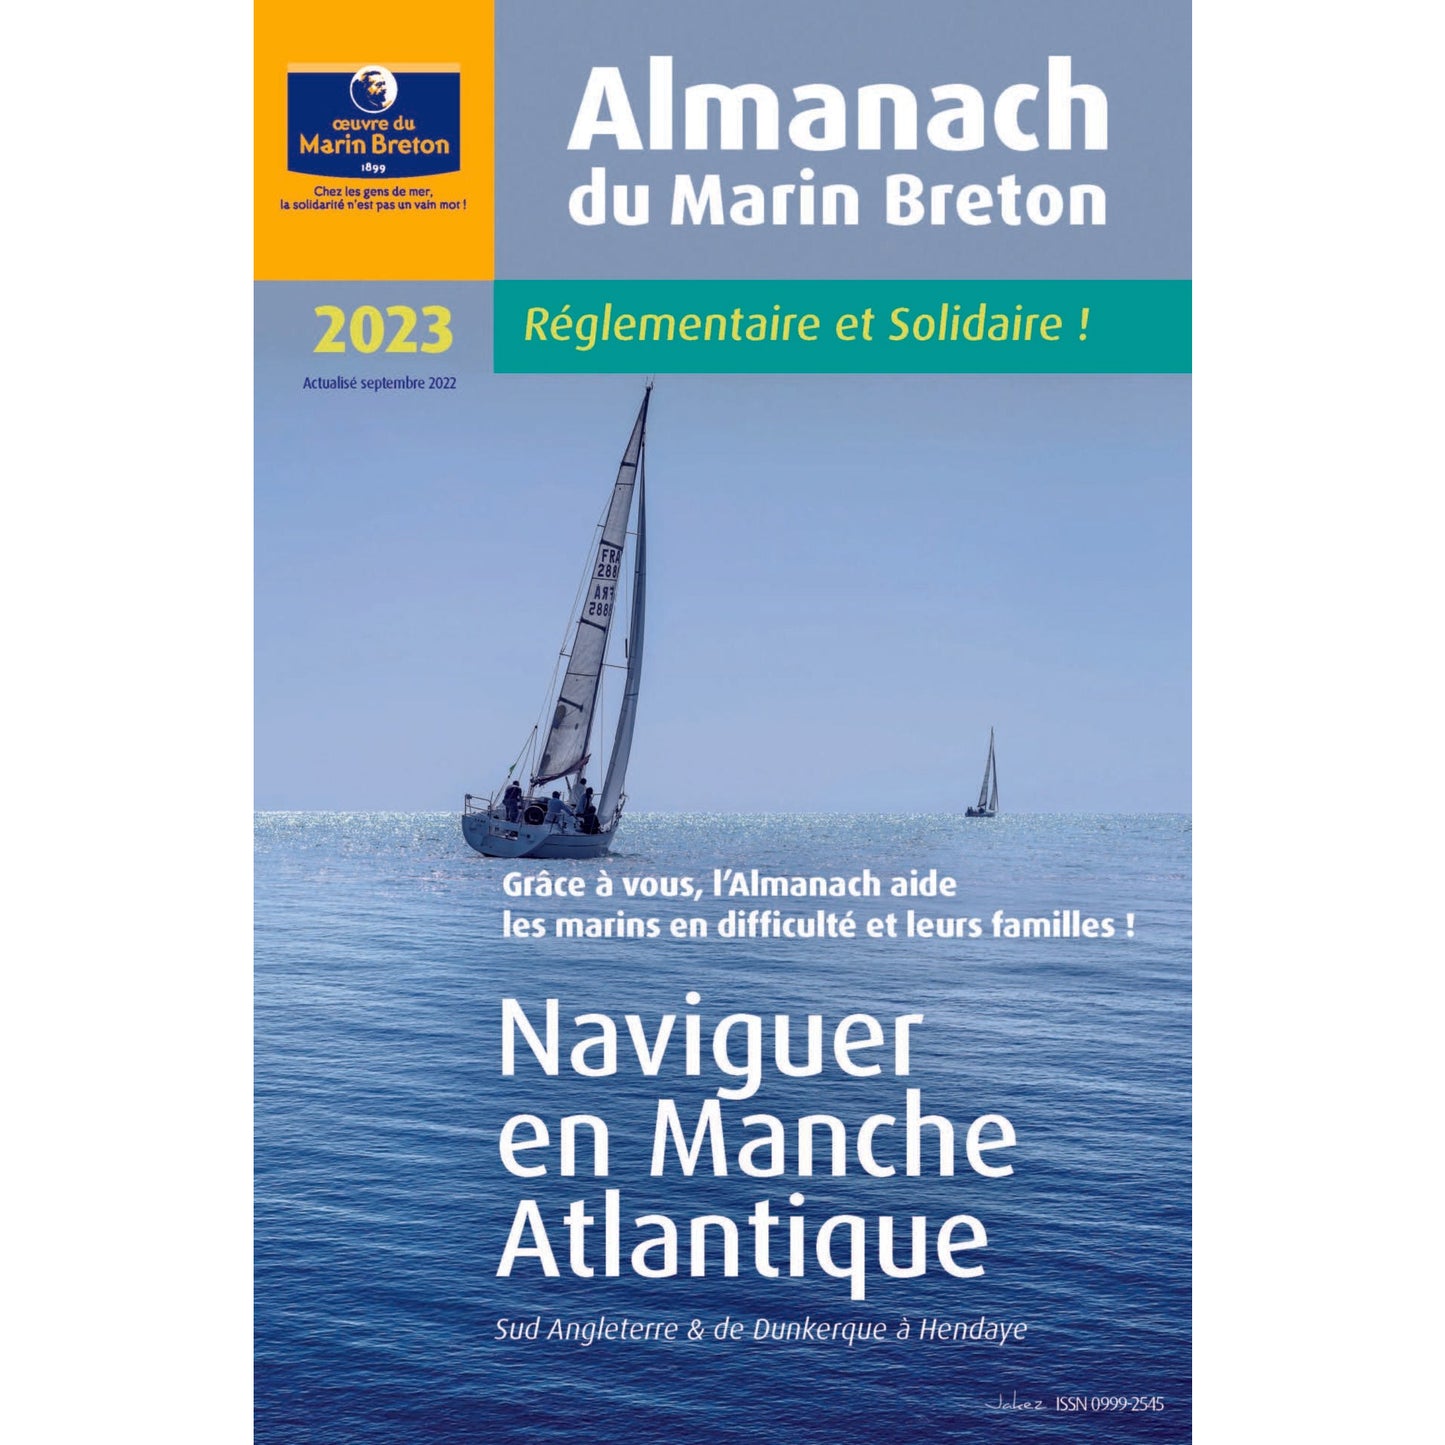 ALMANACH DU MARIN BRETON, ÉDITION HAUTURIÈRE 2023